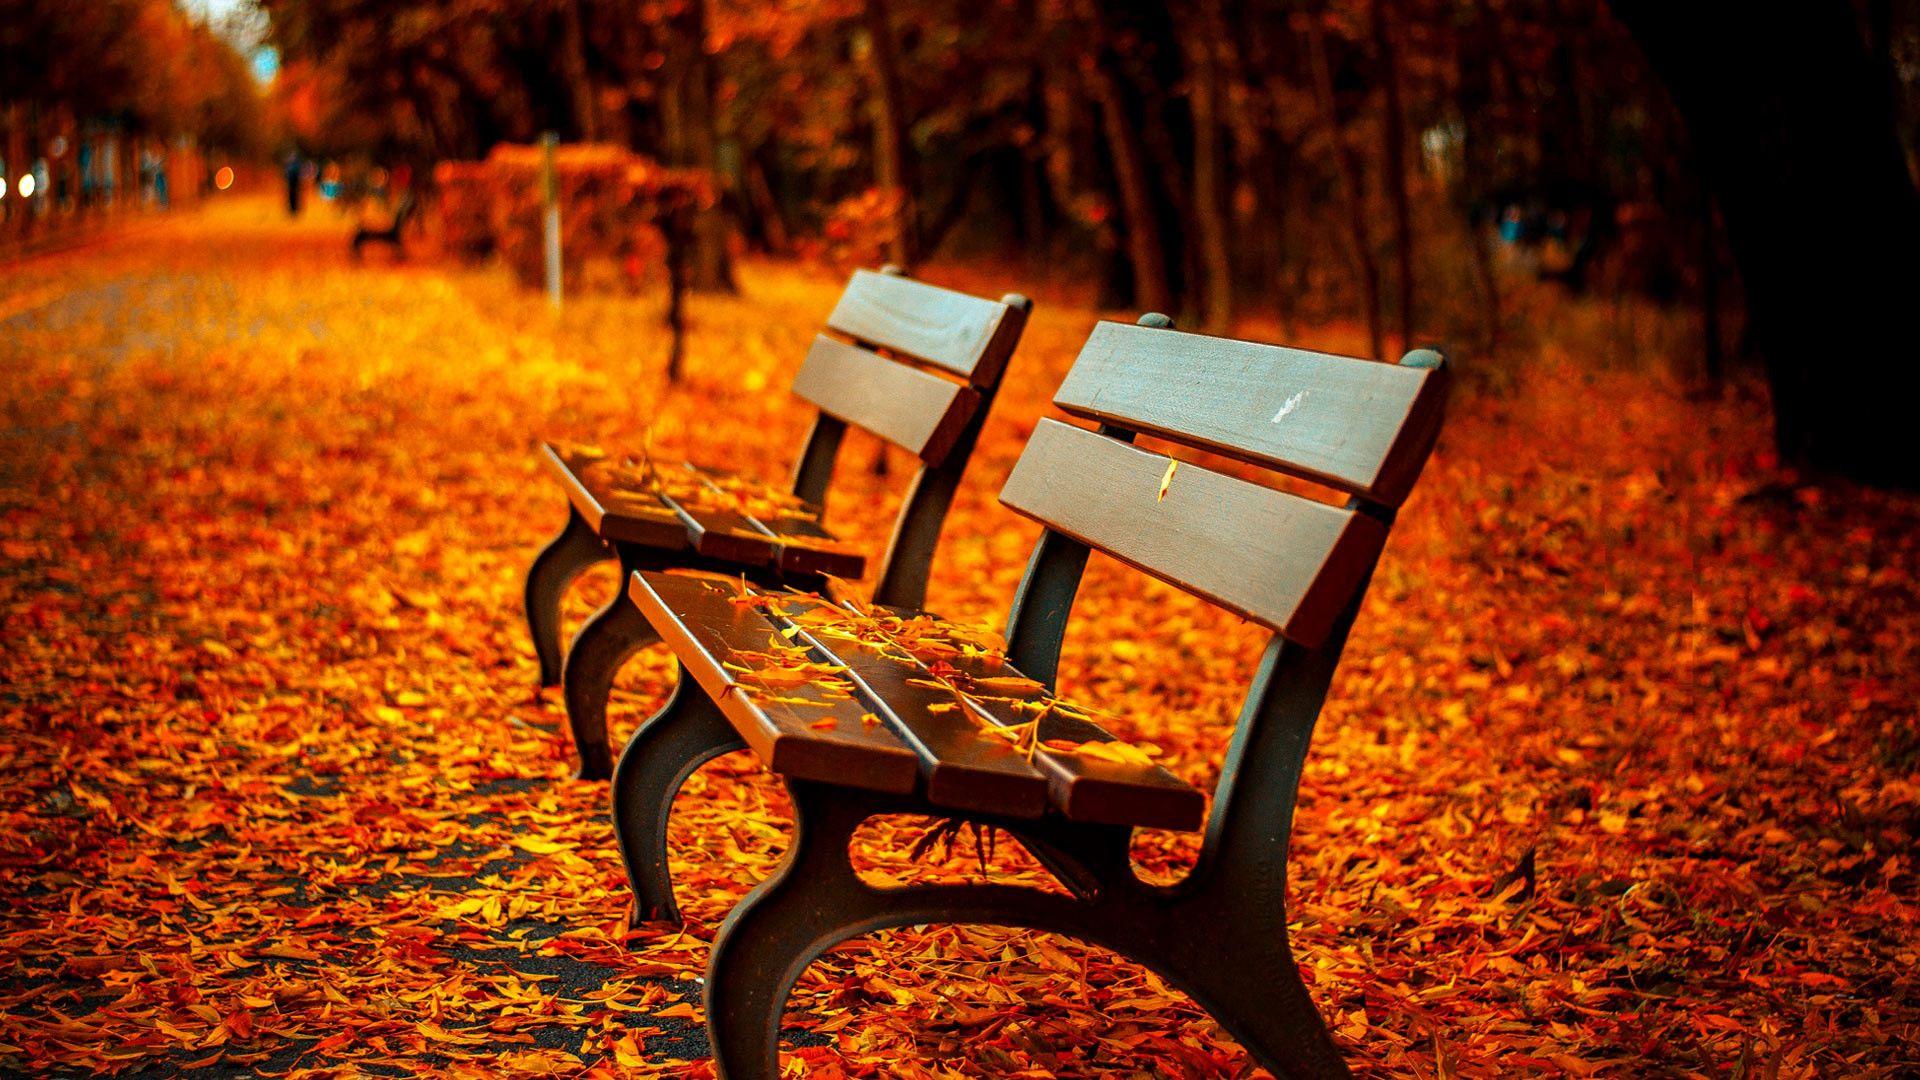 Autumn Scenes Wallpaper background picture